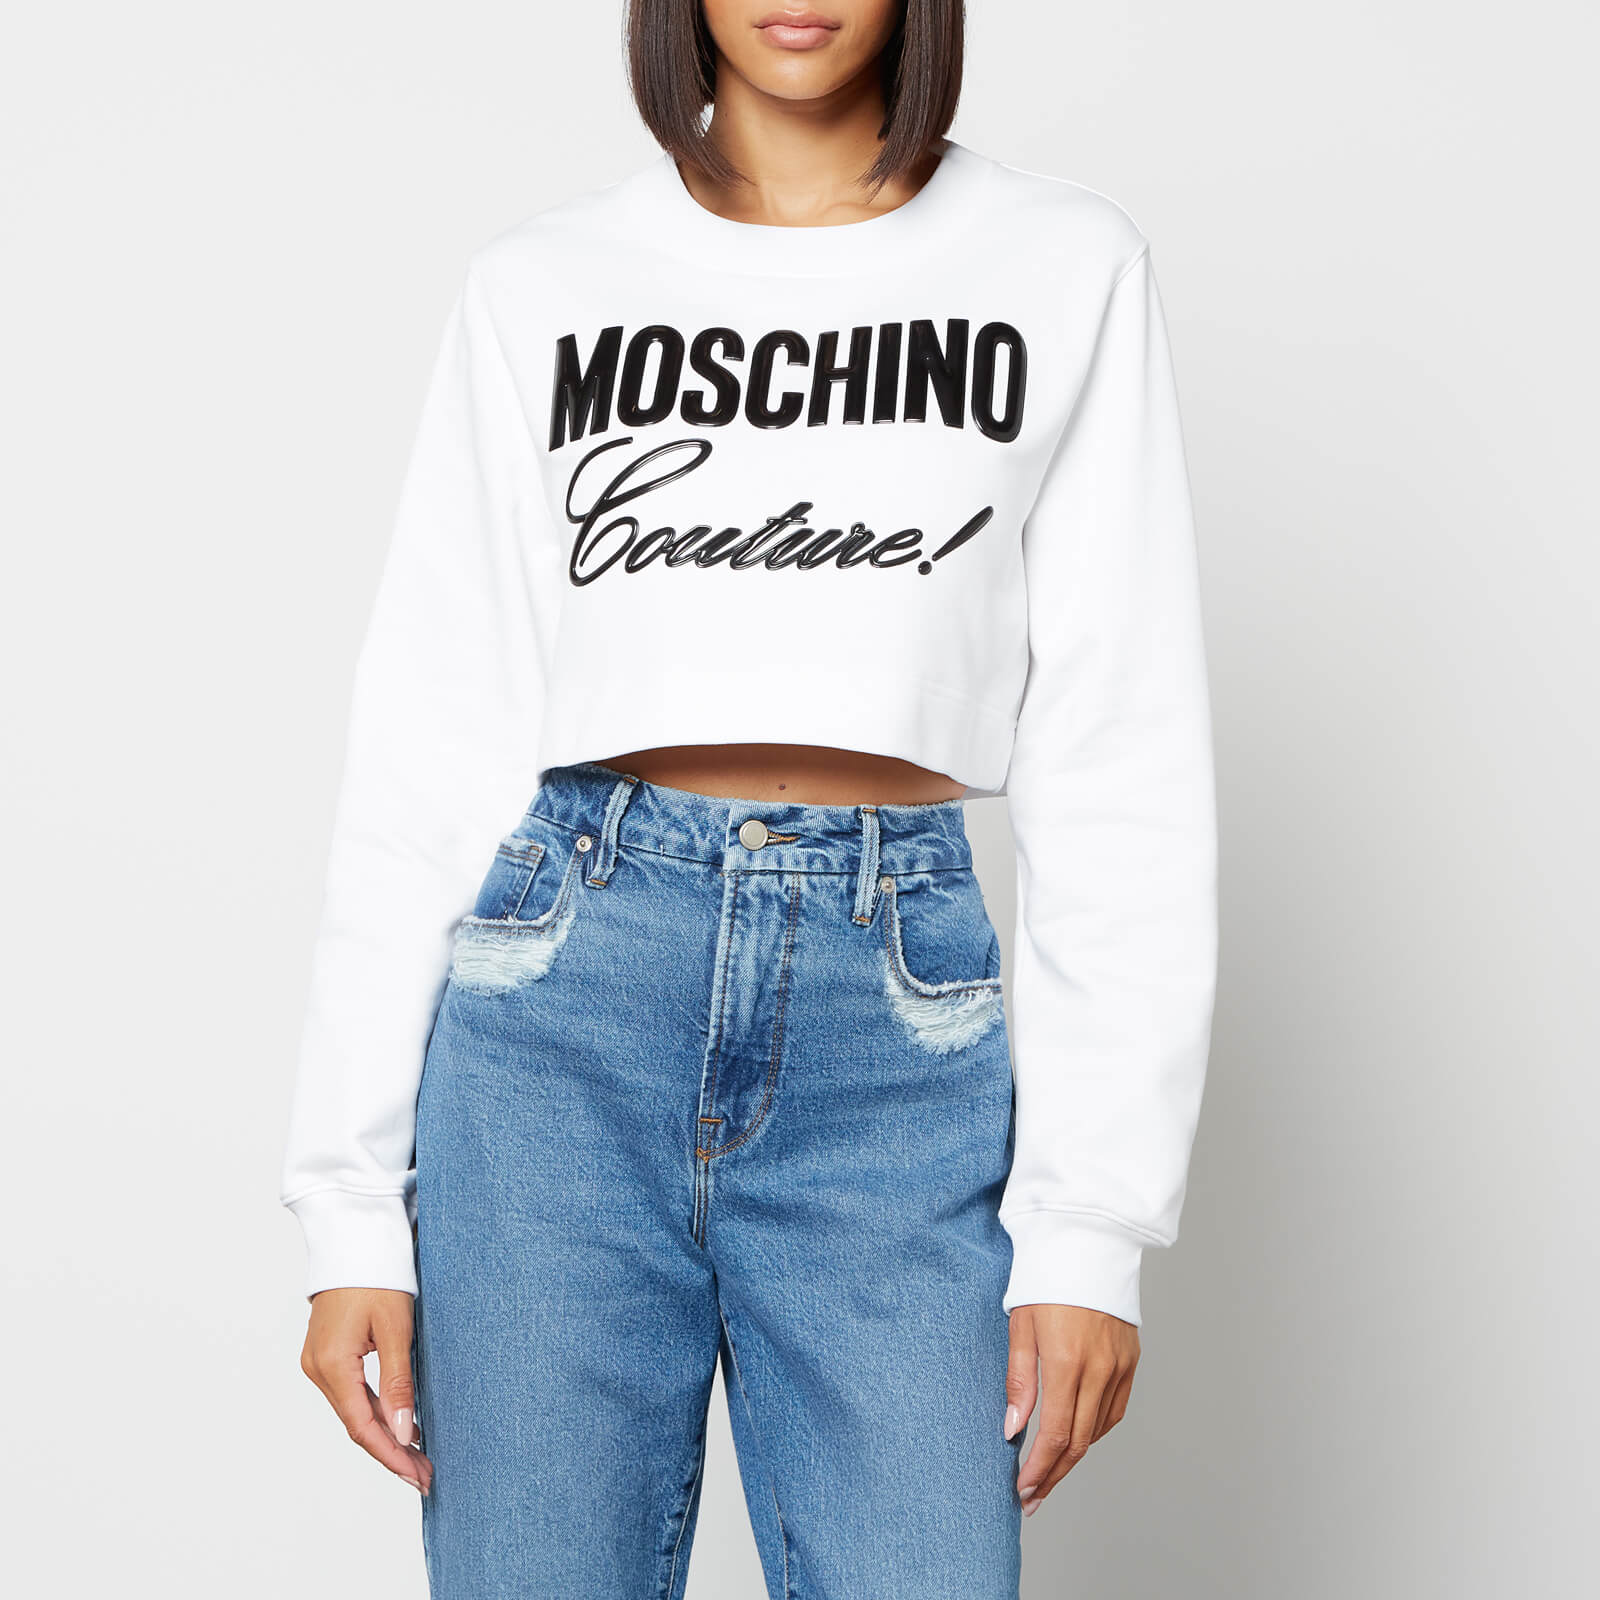 Moschino Couture Loopback Cotton-Jersey Sweatshirt - IT 38/UK 6